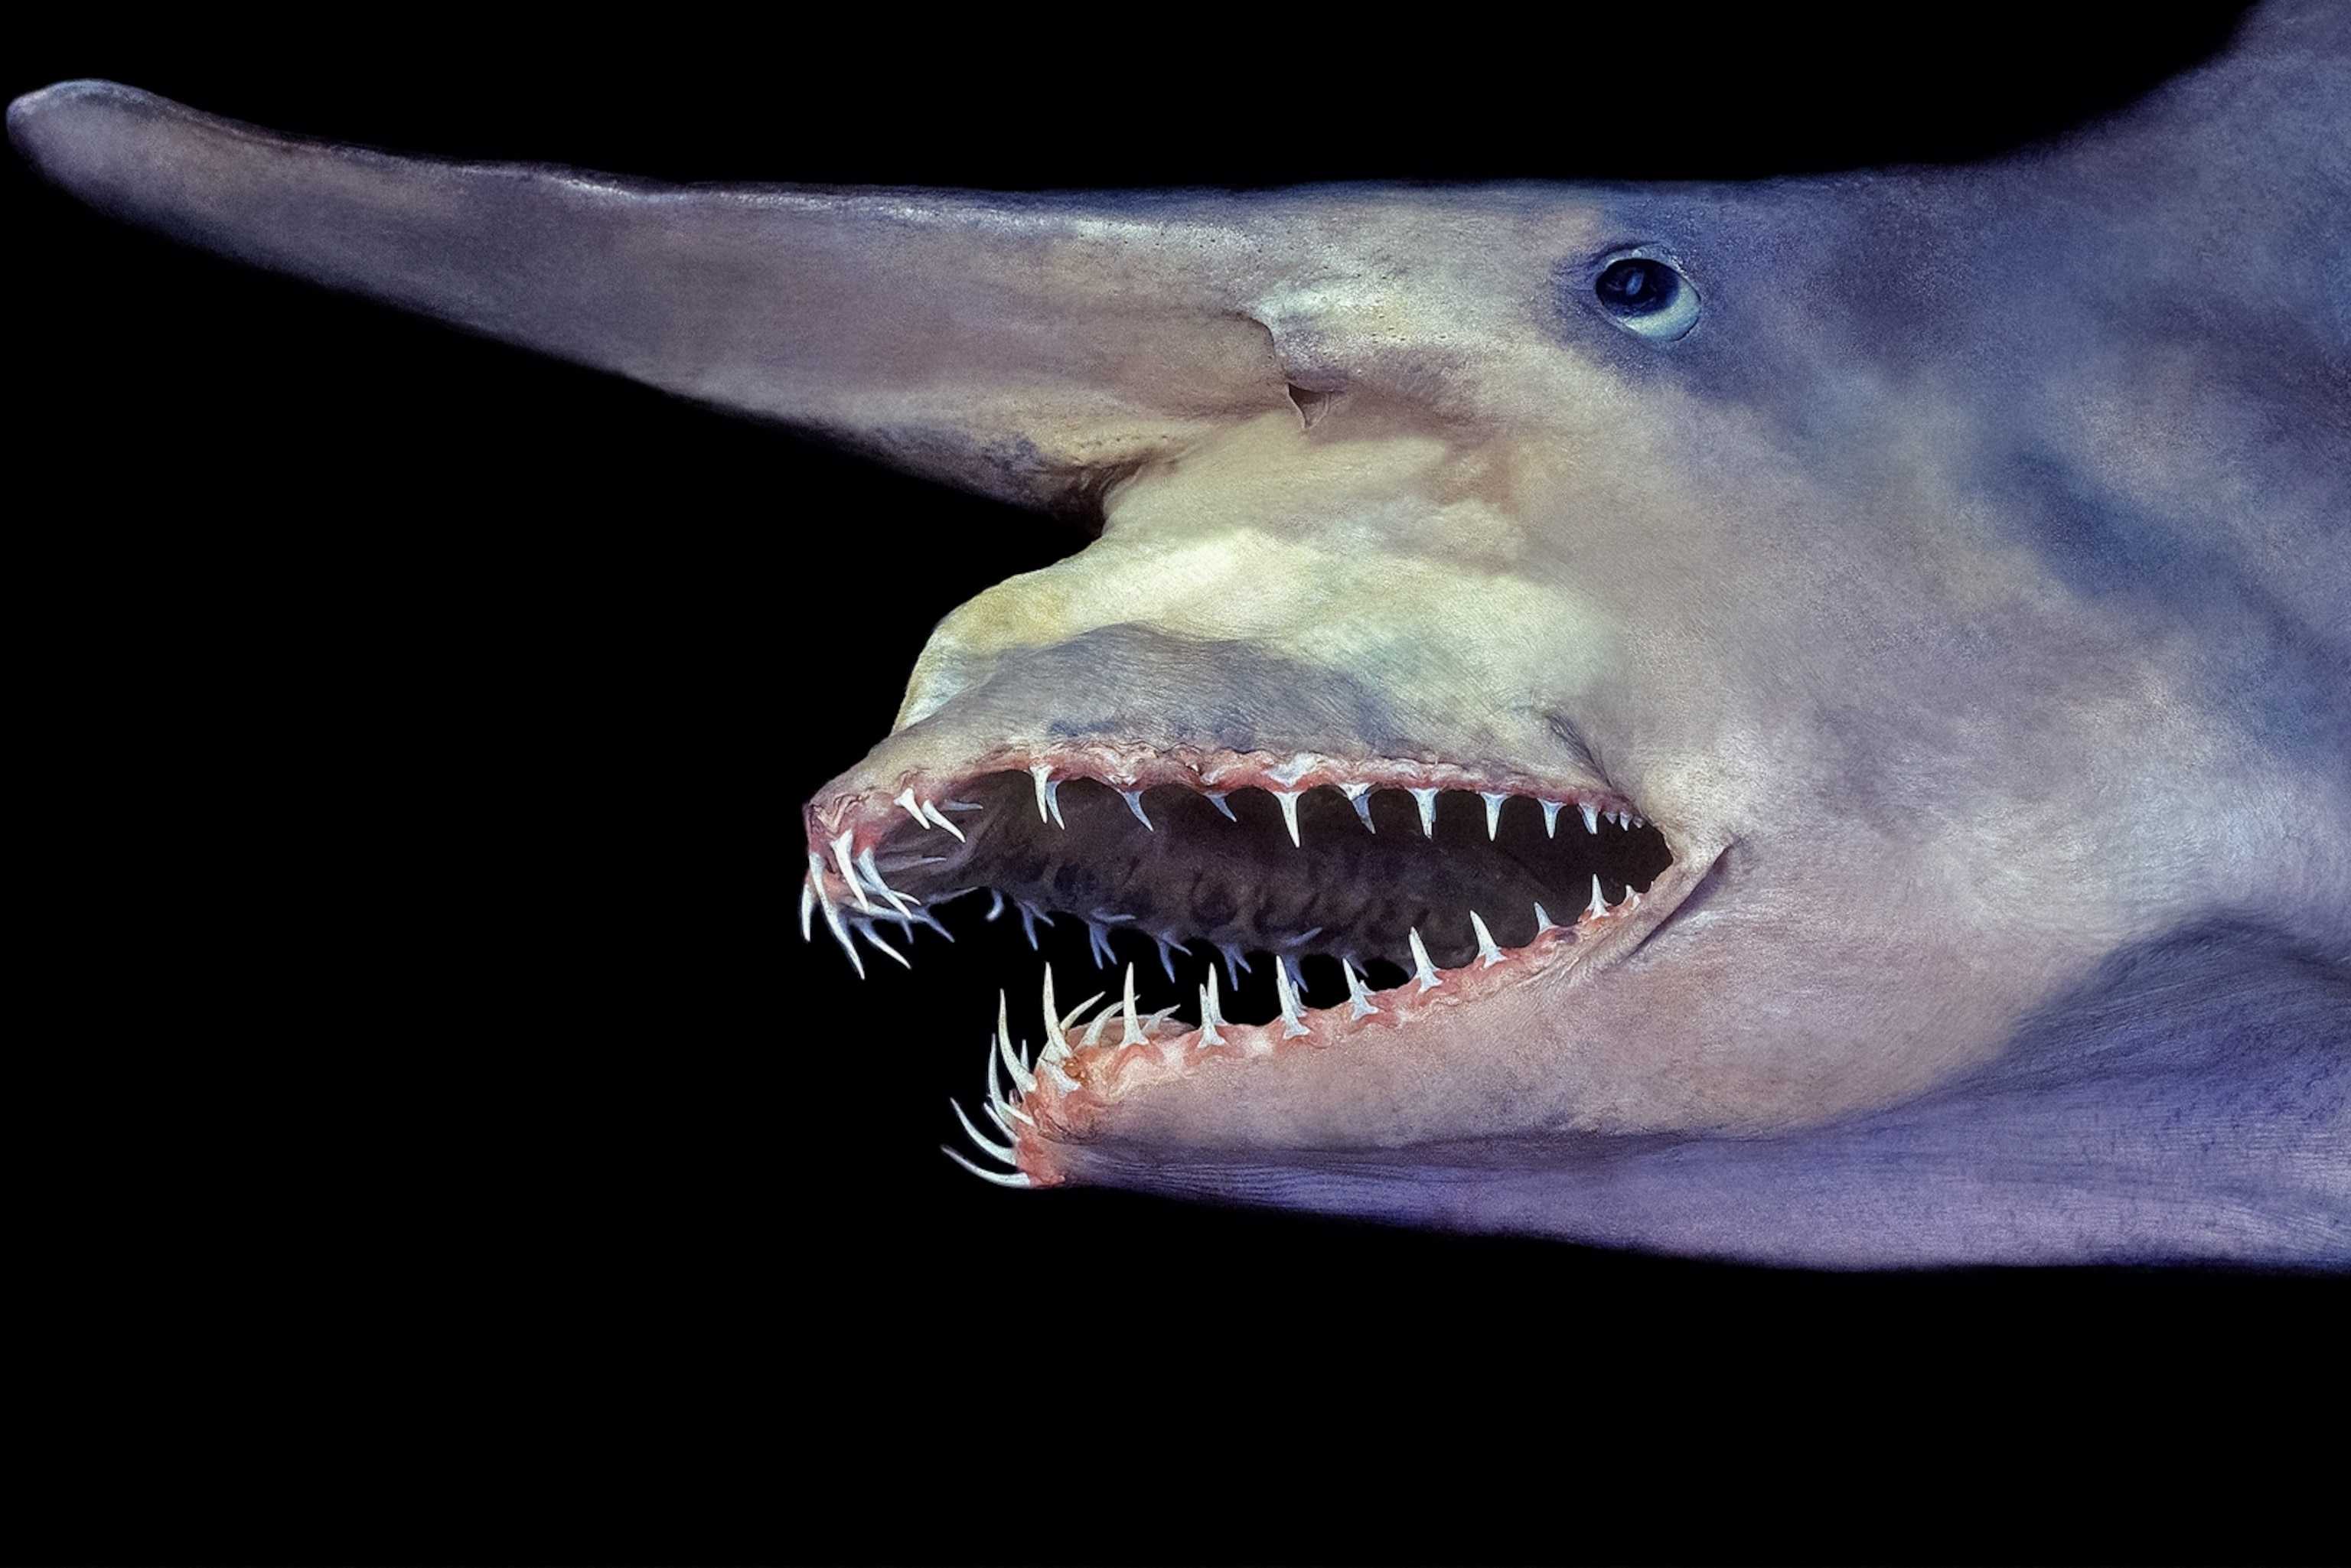 The goblin shark has an elongated mouth.